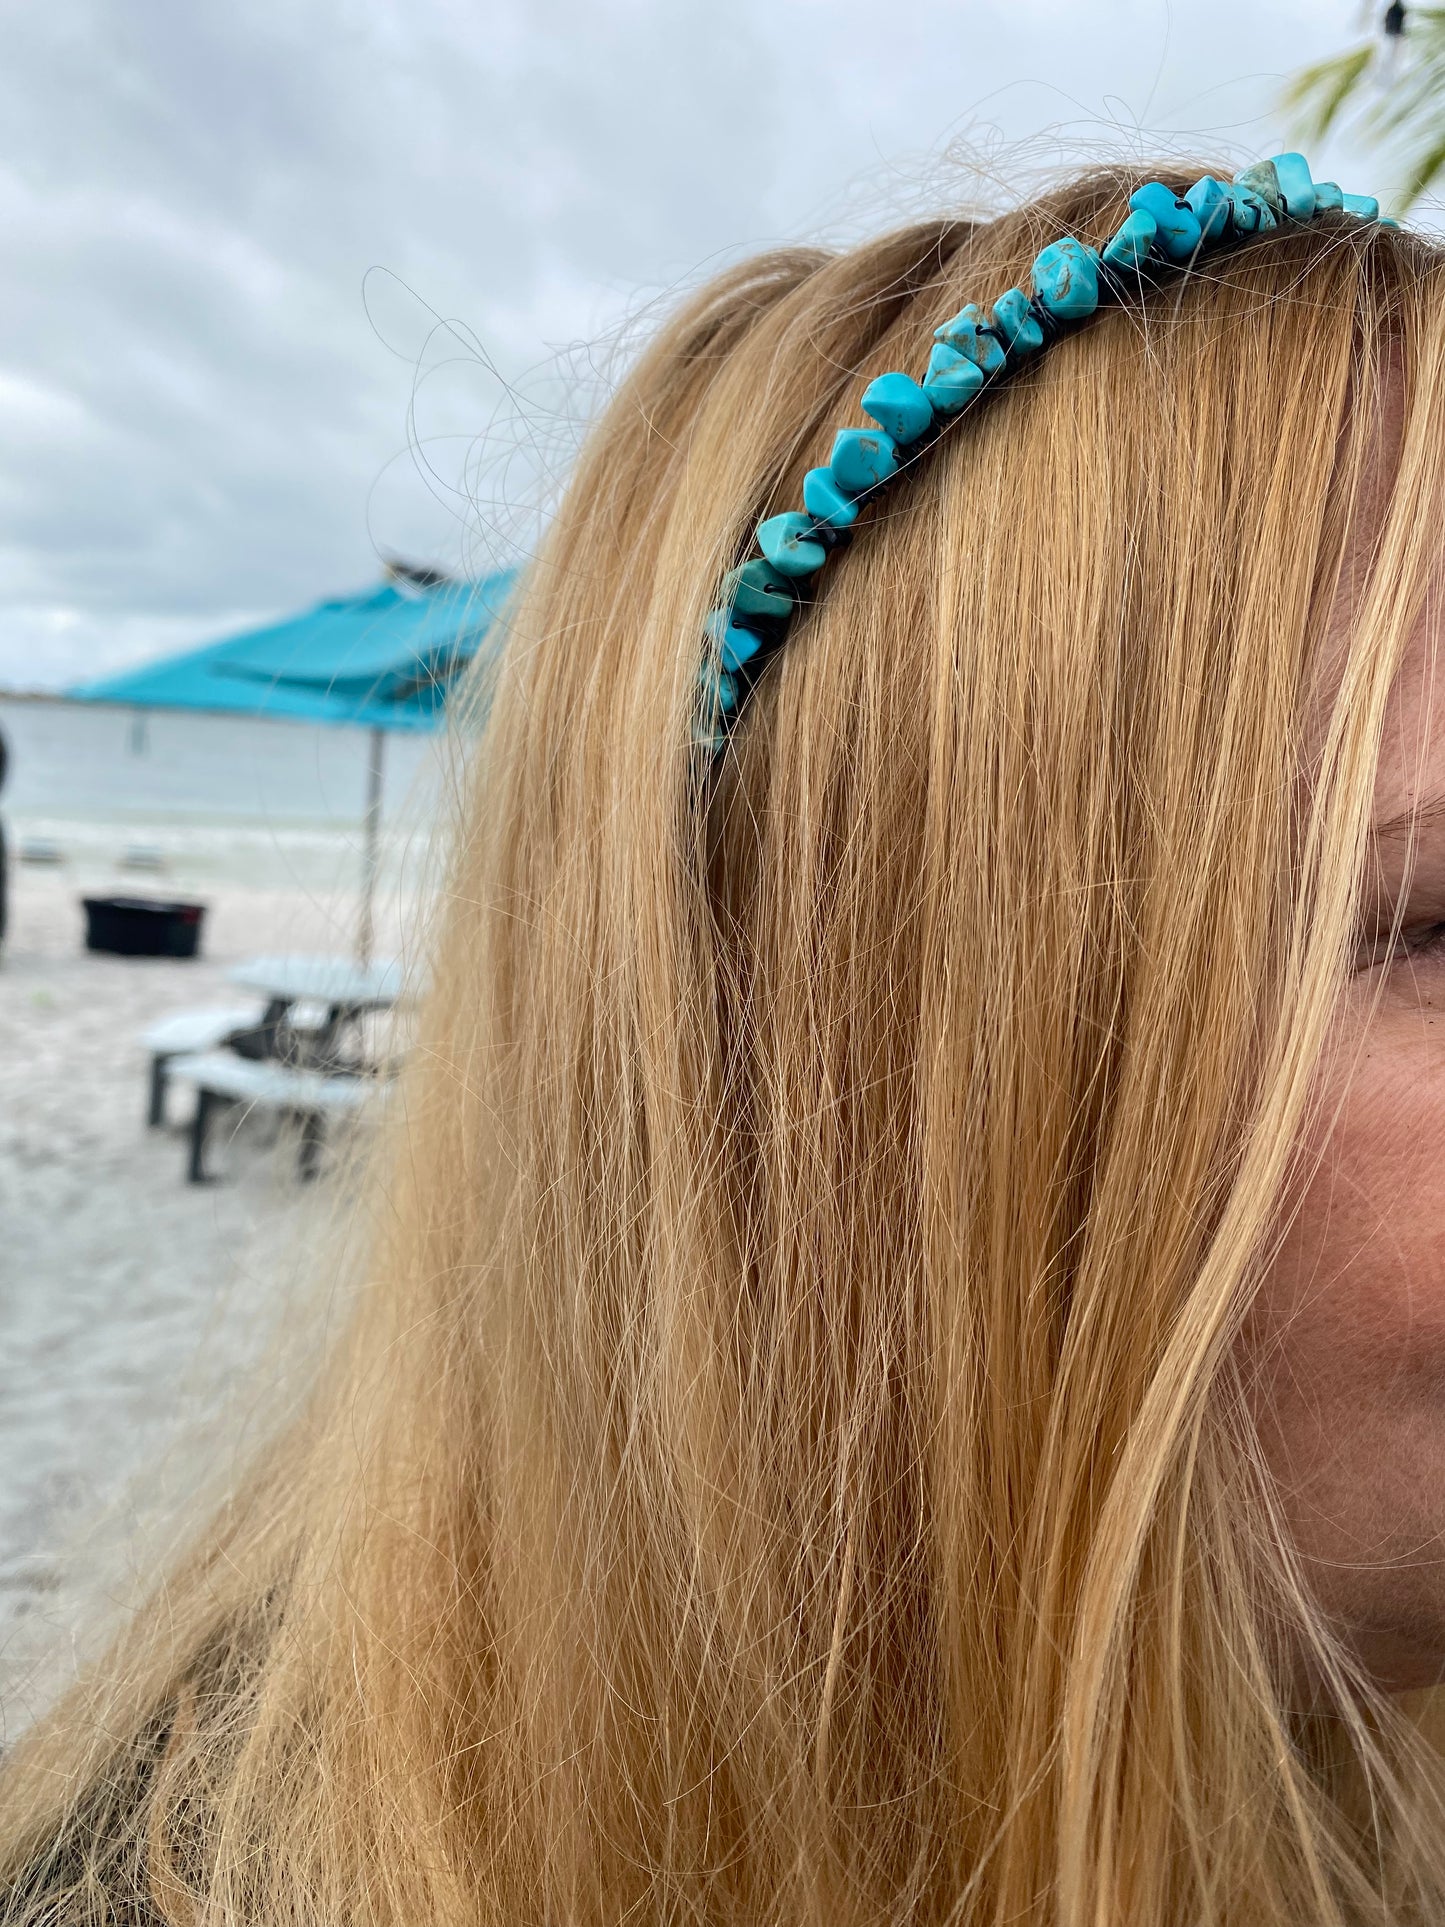 Azure Tranquility: Turquoise Howlite Chip Headband